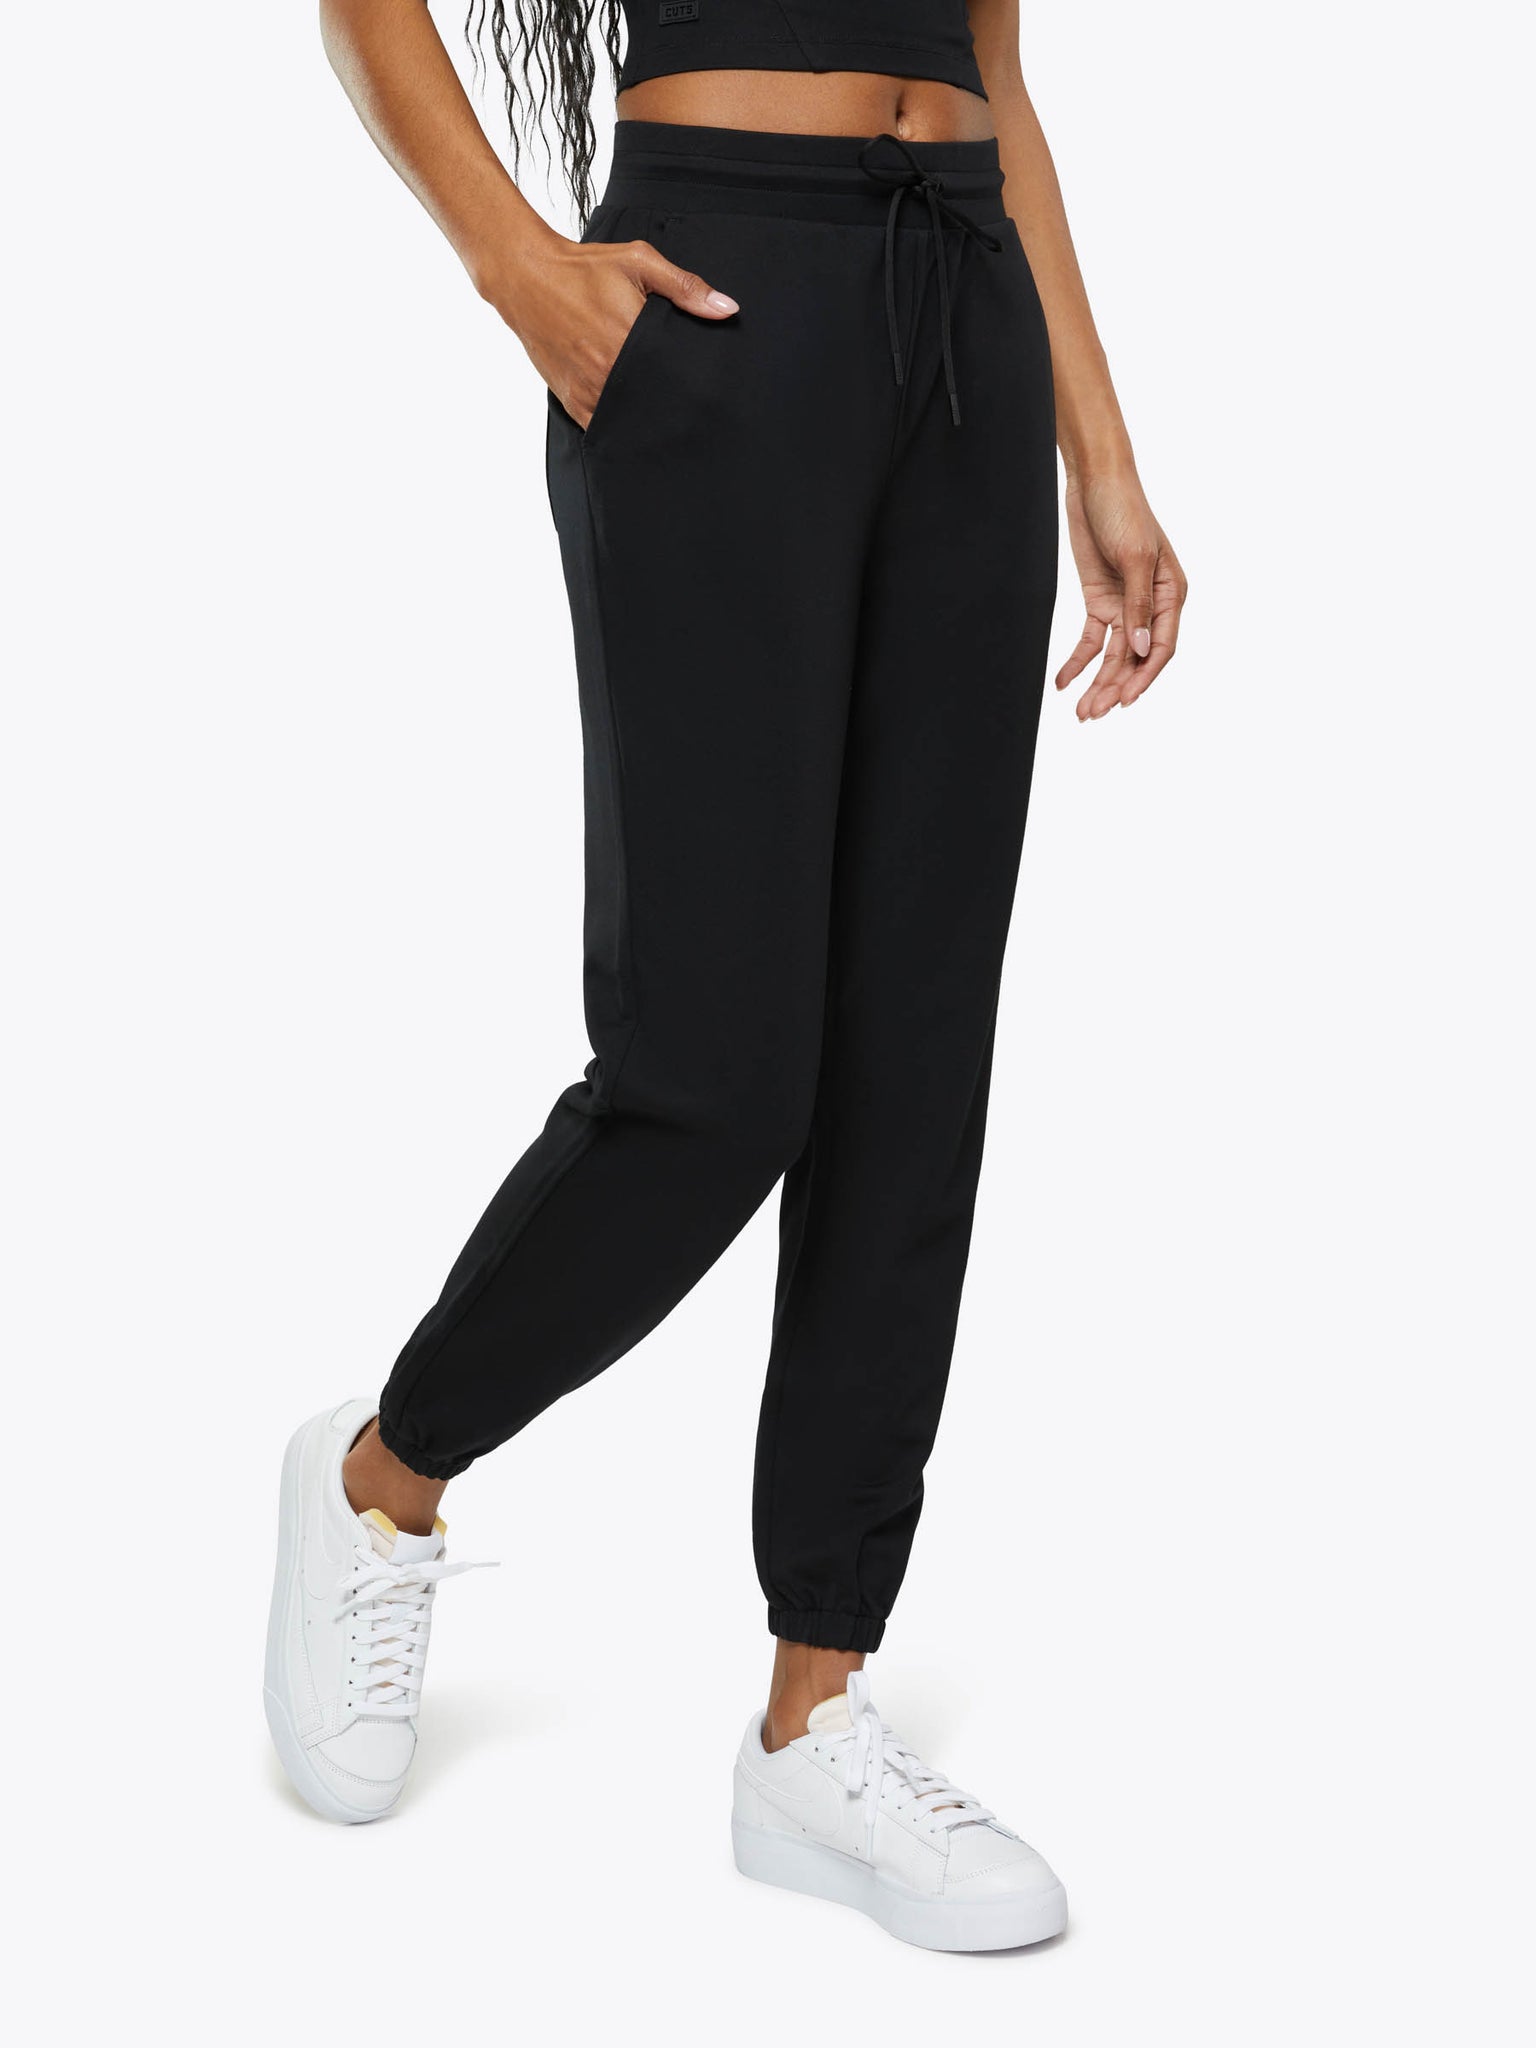 Nike Womens Capri Pants Sweatpants Jogger Size Medium Dri Fit